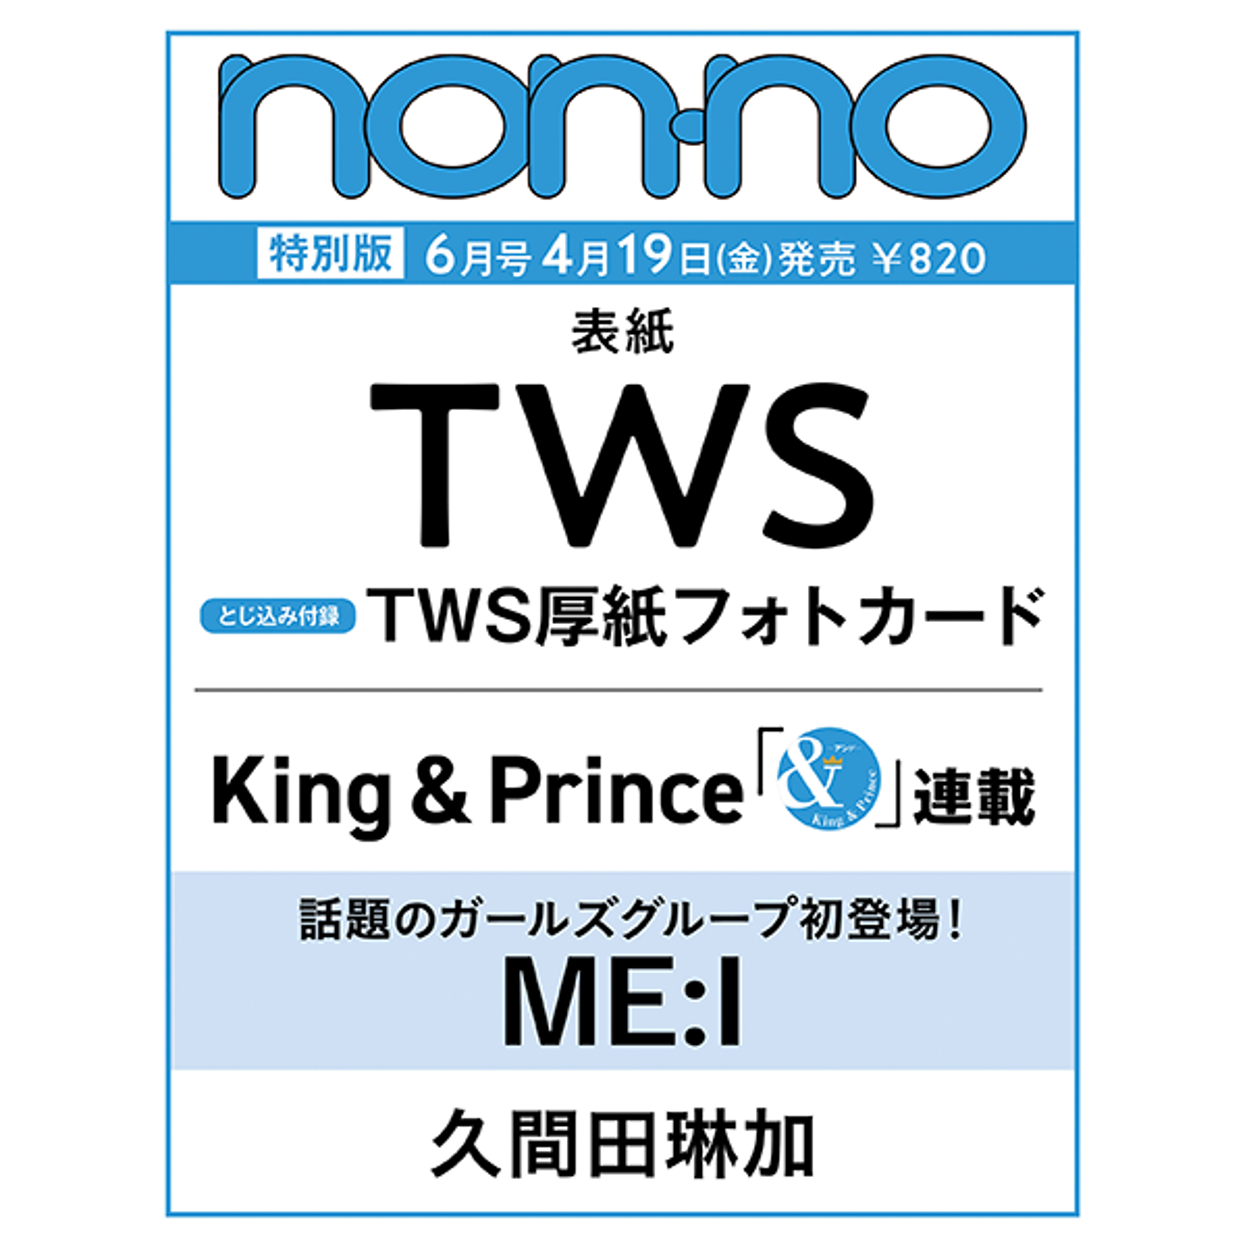 MEN&#039;S NON-NO Men&#039;s Nono June issue special) Cover: TOURS (TWS)) (Japanese magazine)